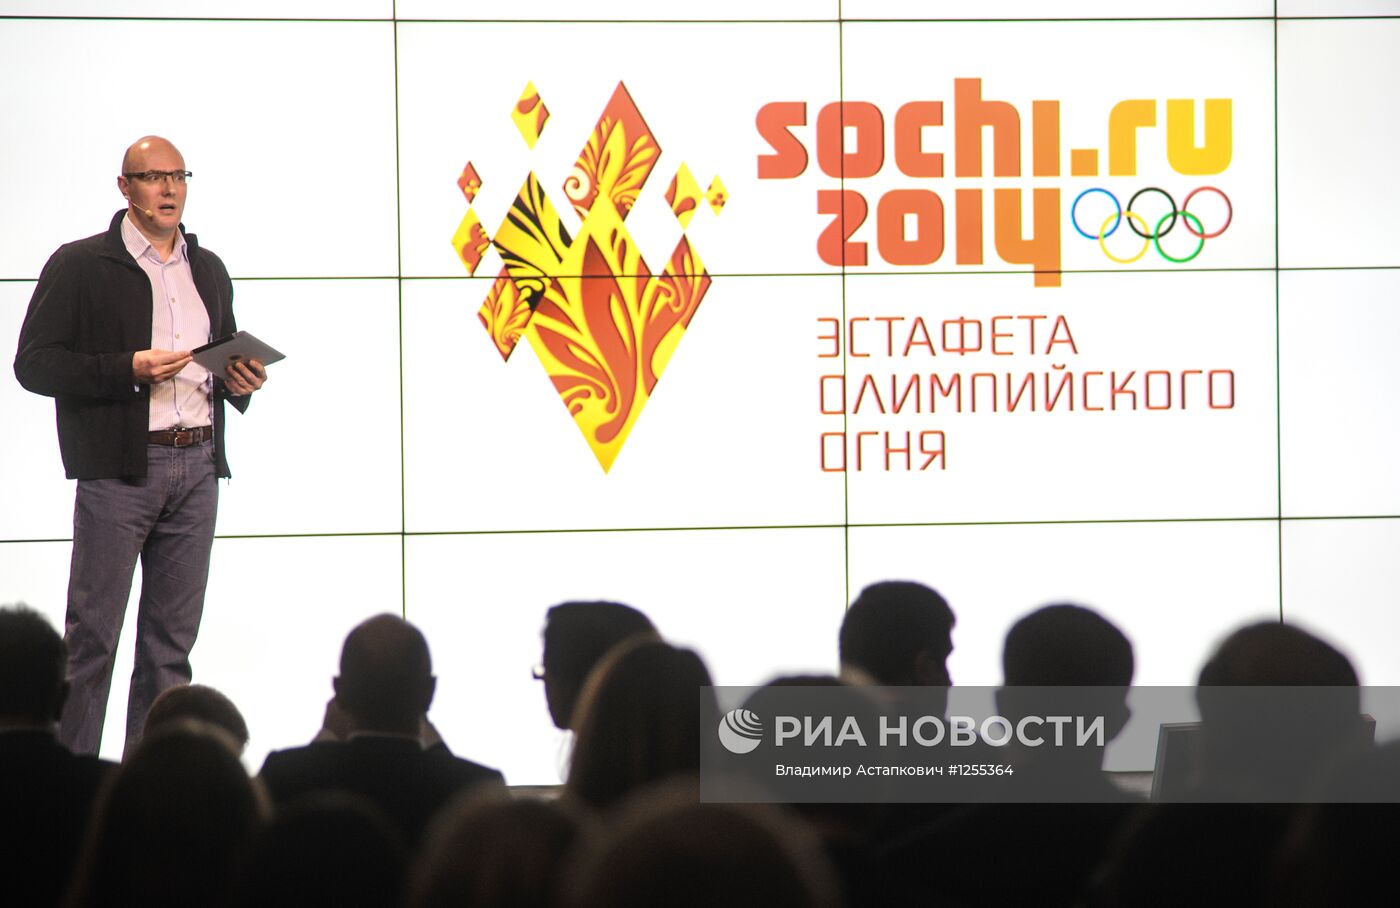 Презентация маршрута эстафеты Олимпийского огня "Сочи 2014"